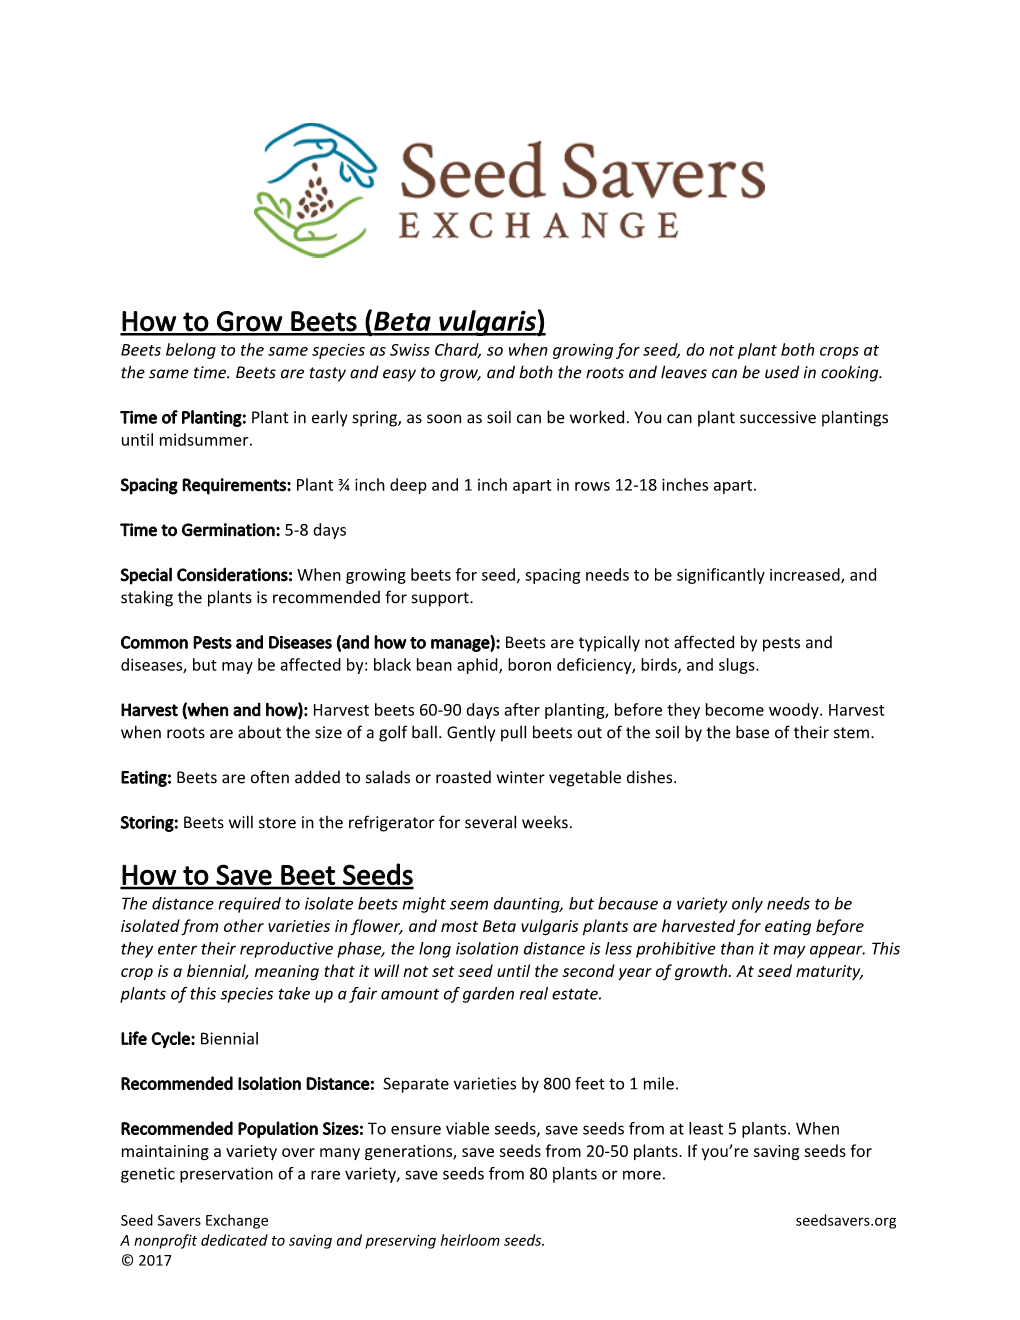 How to Grow Beets (​Beta Vulgaris​) How to Save Beet Seeds